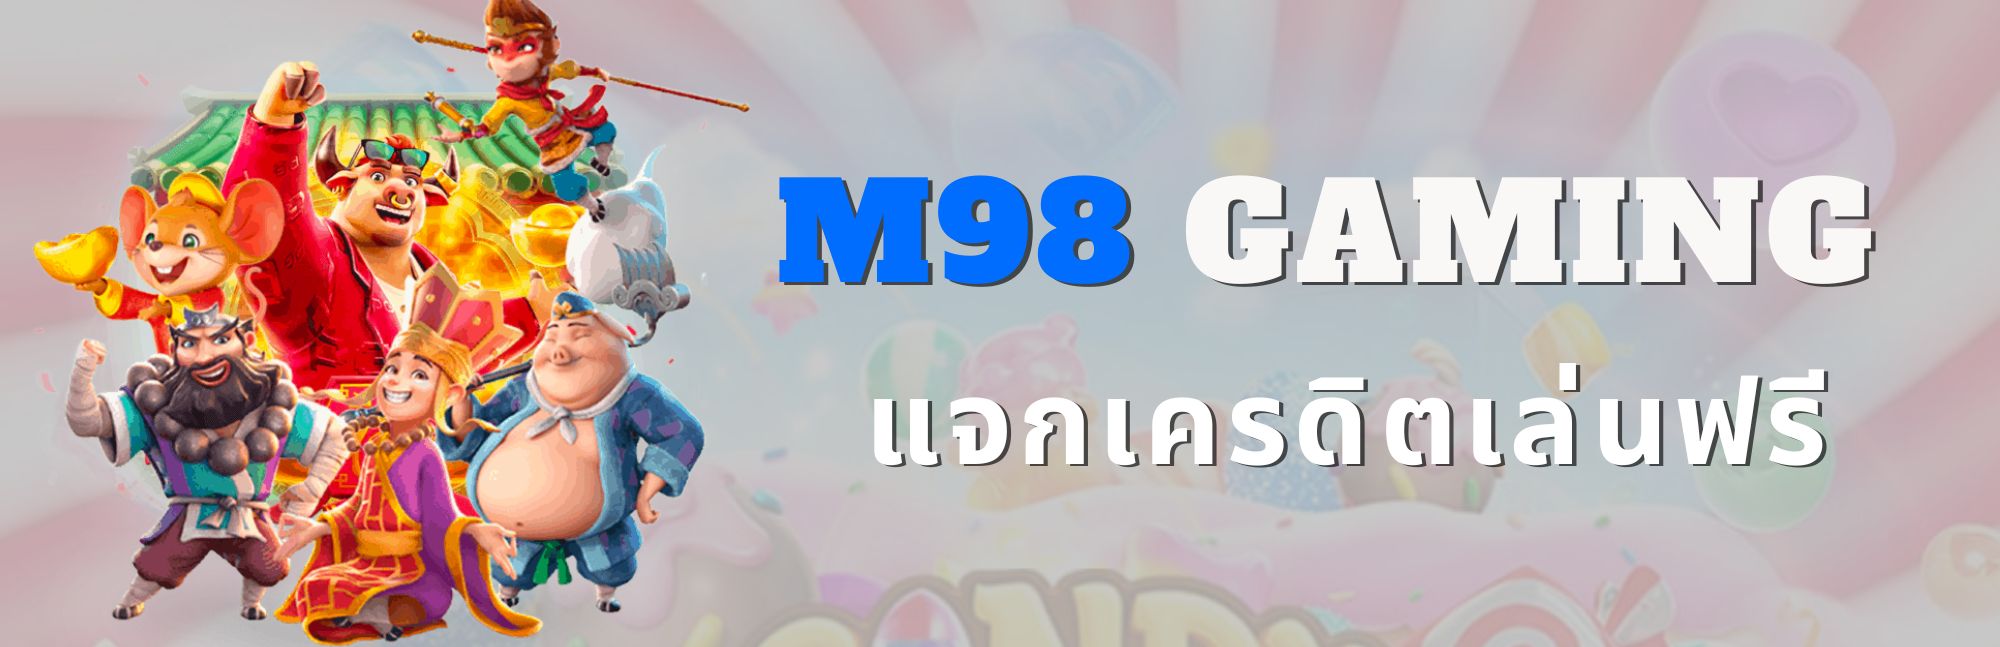 M98 Gaming ทดลองเล่นสล็อตฟรี ไม่ต้องฝาก กดรับได้เอง!